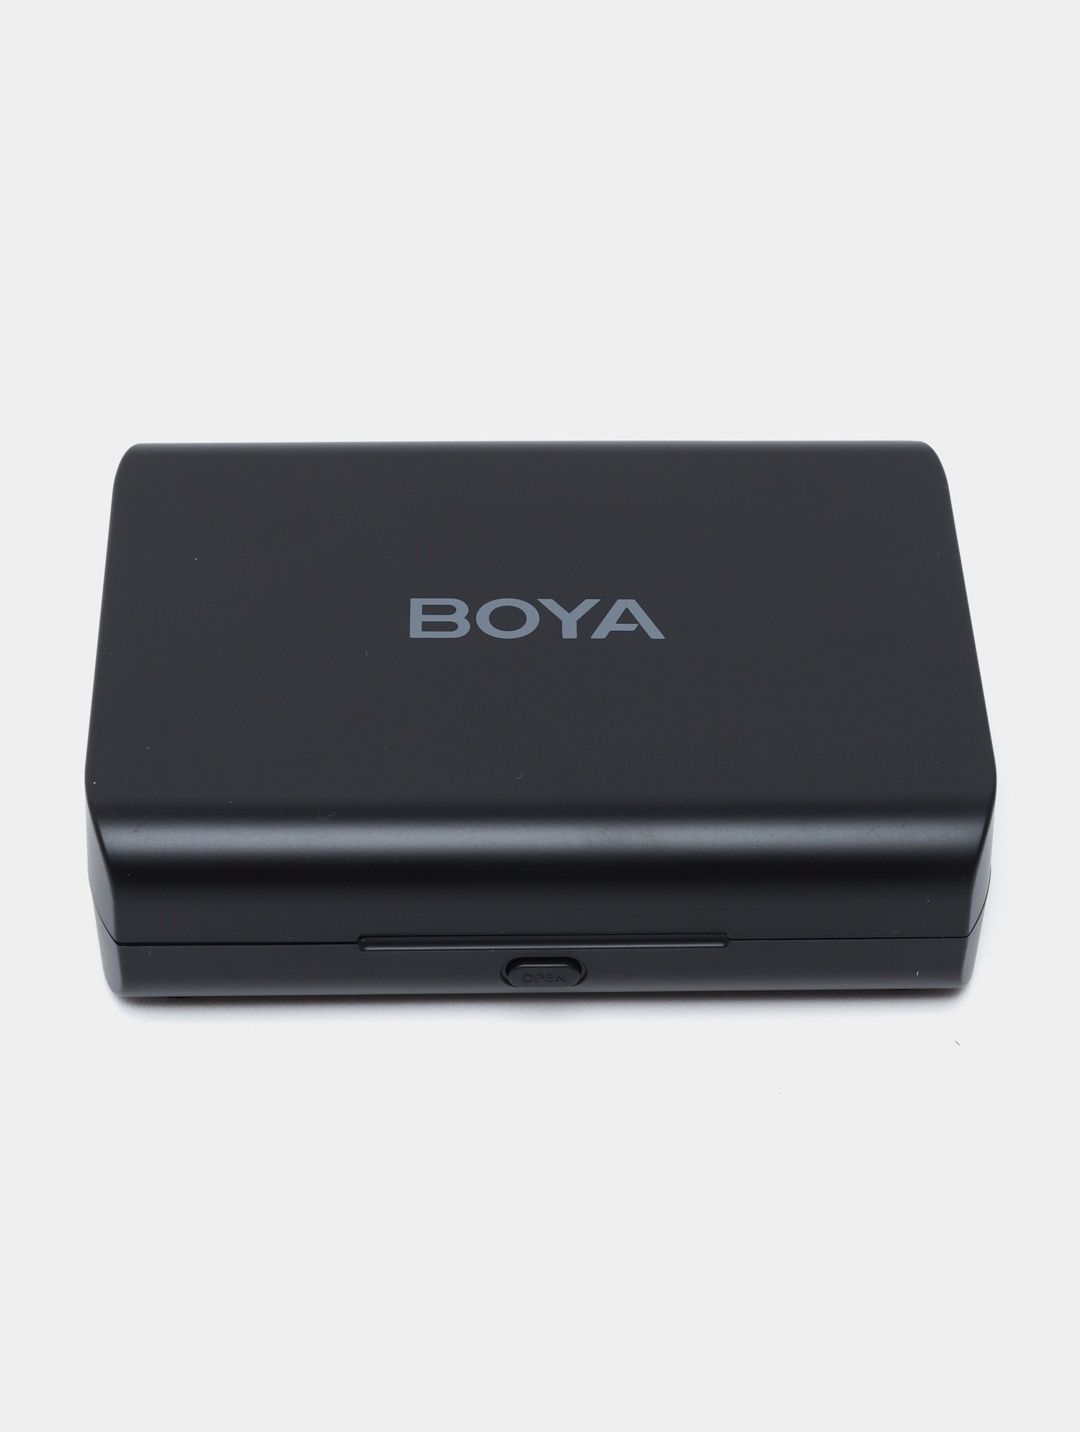 Boya xm-6 k4 двойной микрофон для iPhone | saramonic blink 500 prox b4